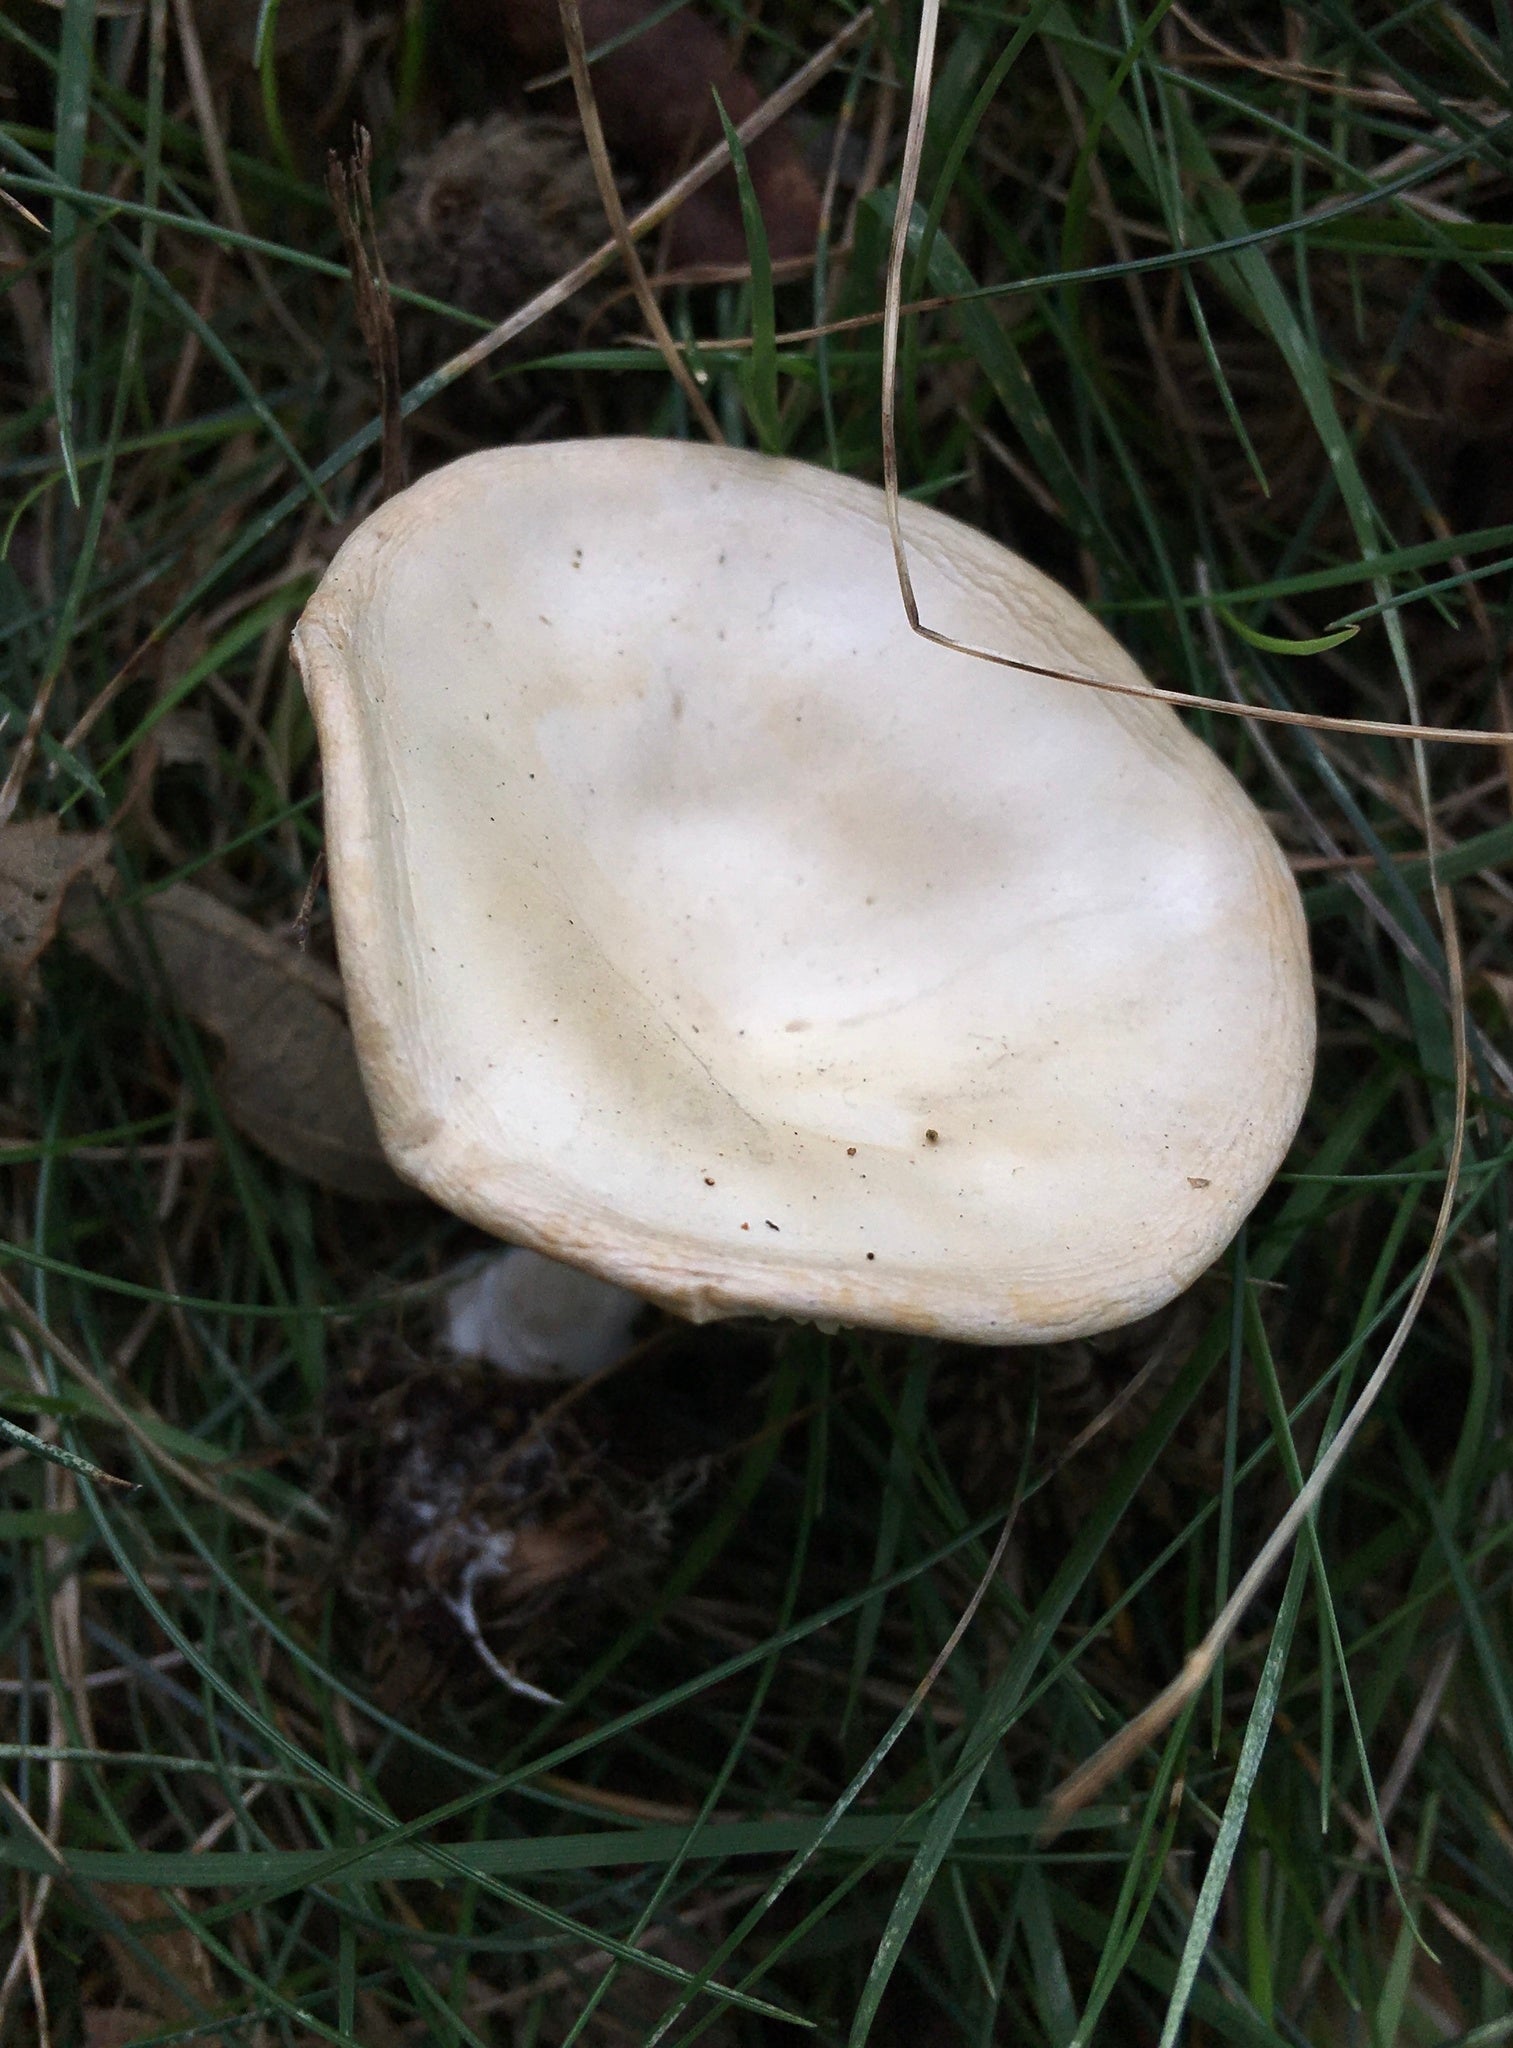 Fools Funnel mushrooms are often mistaken for edible mushrooms